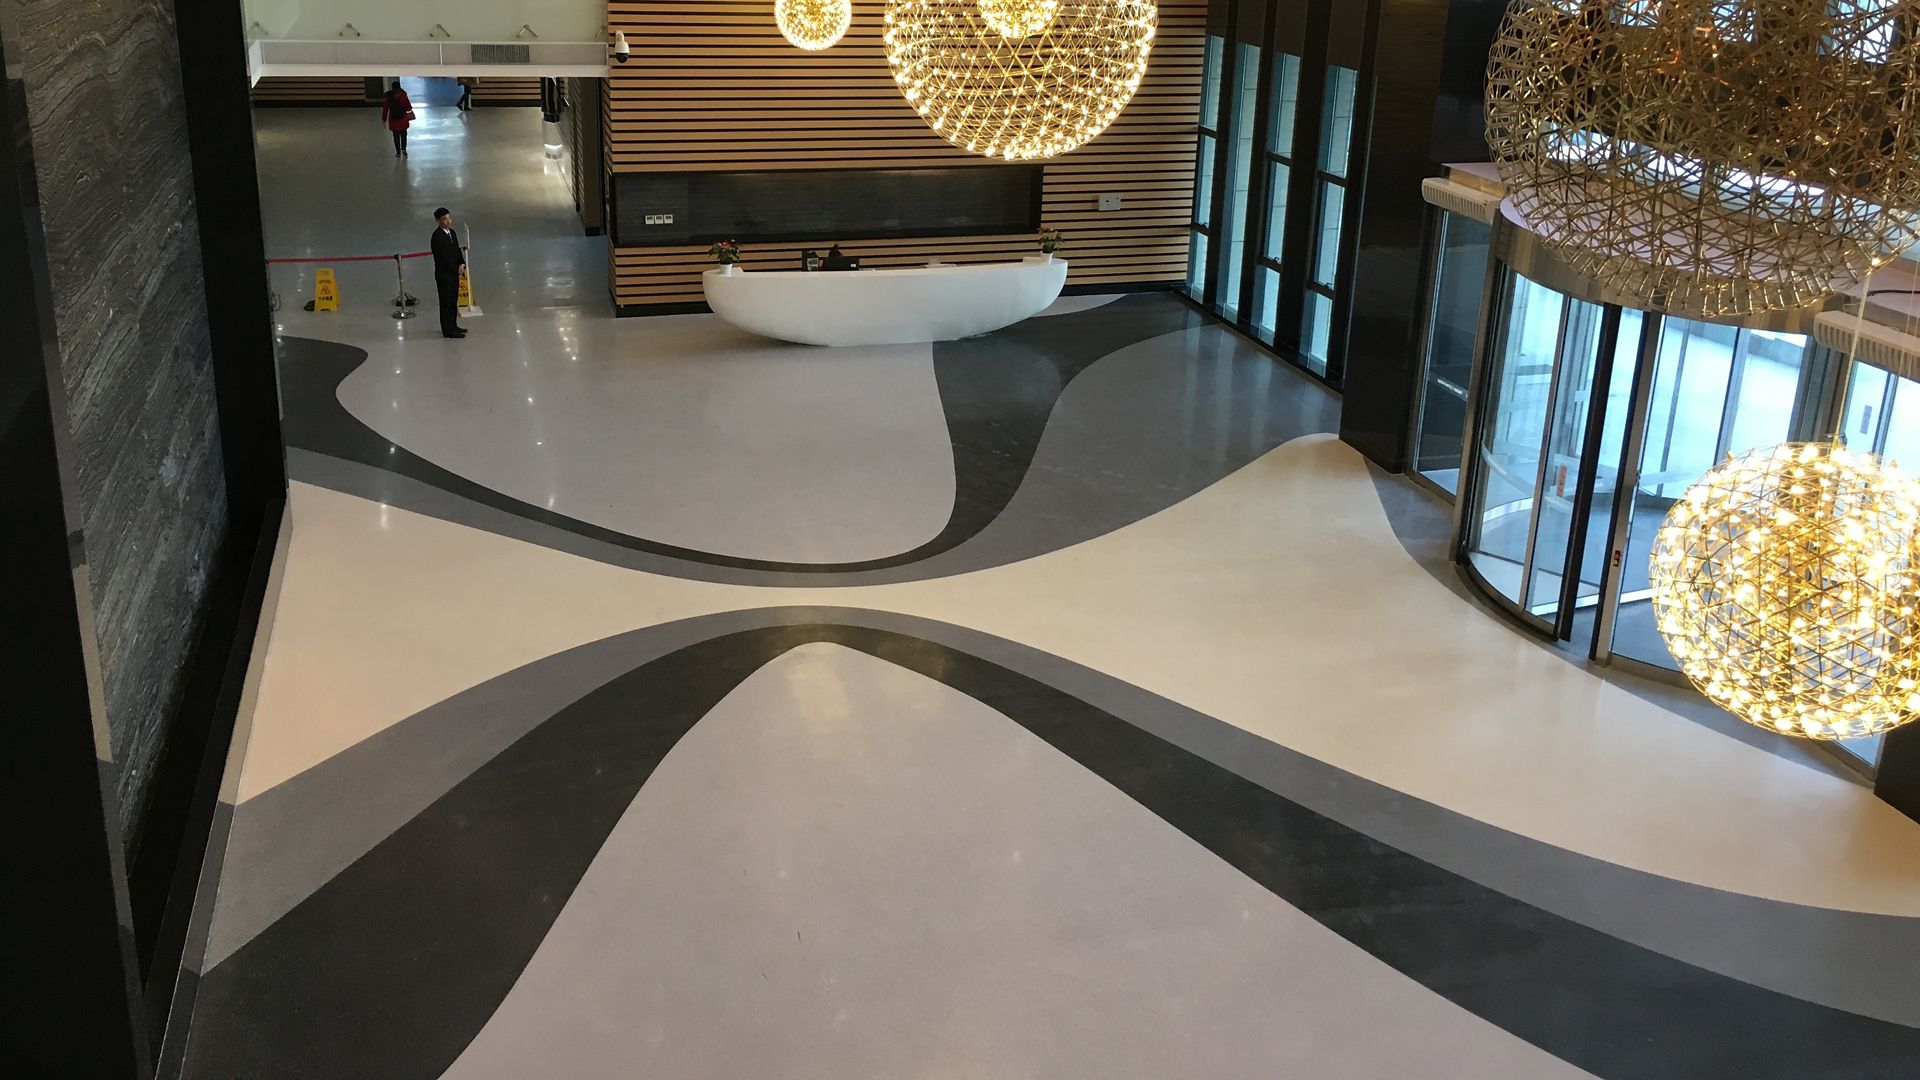 Sikafloor® Terrazzo white grey black floor in public building lobby entry